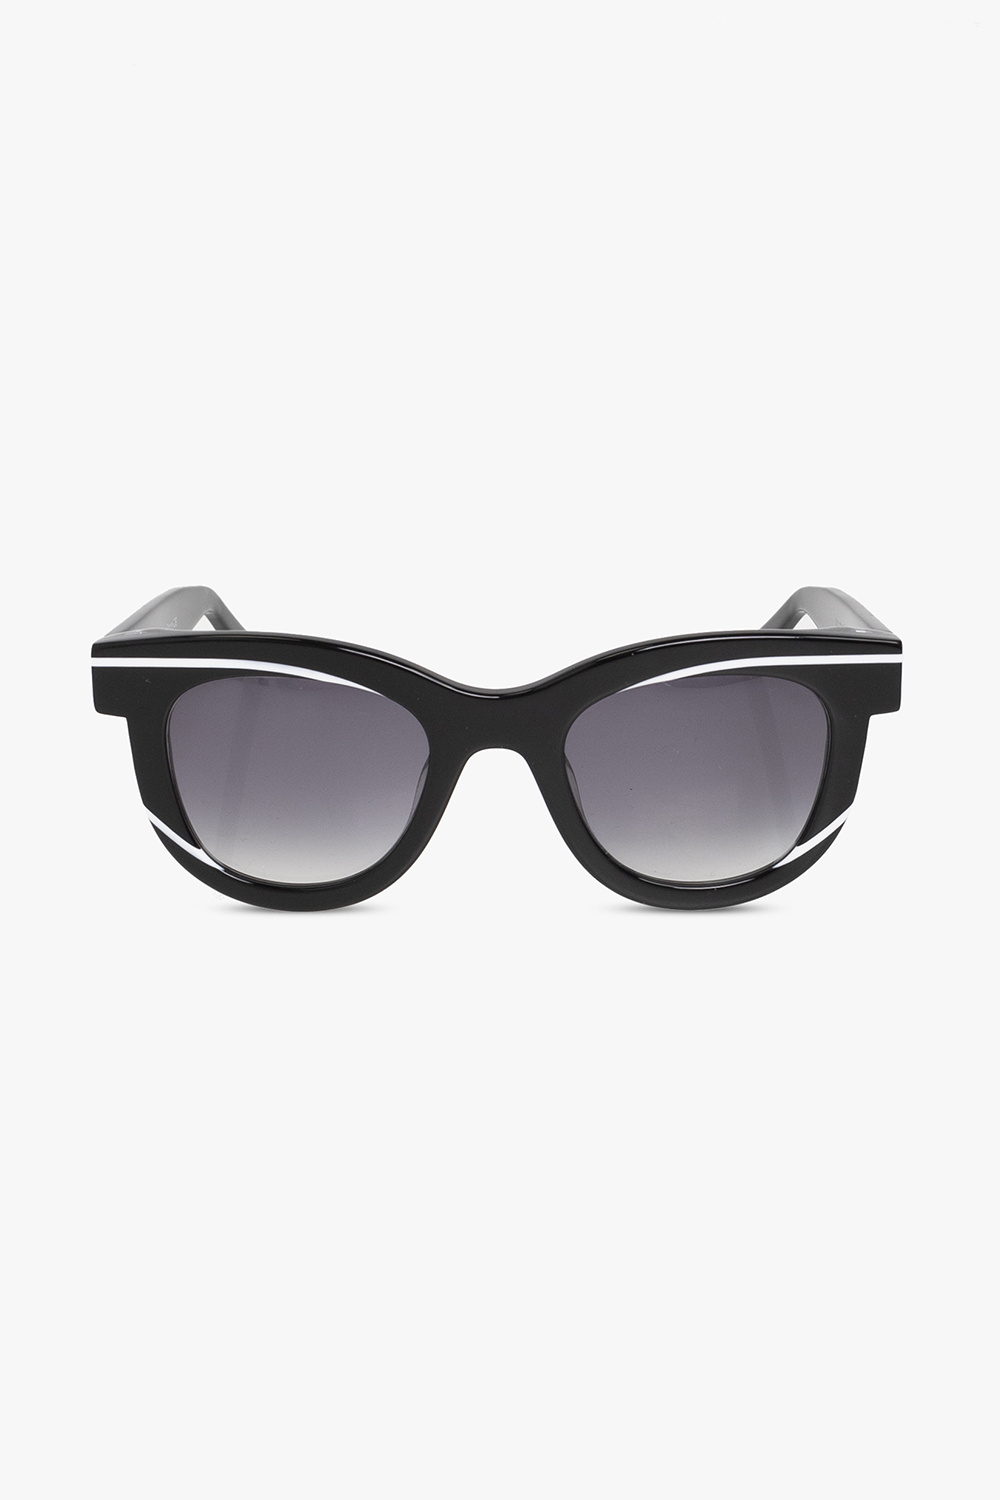 Thierry Lasry ‘Icecreamy’ sunglasses